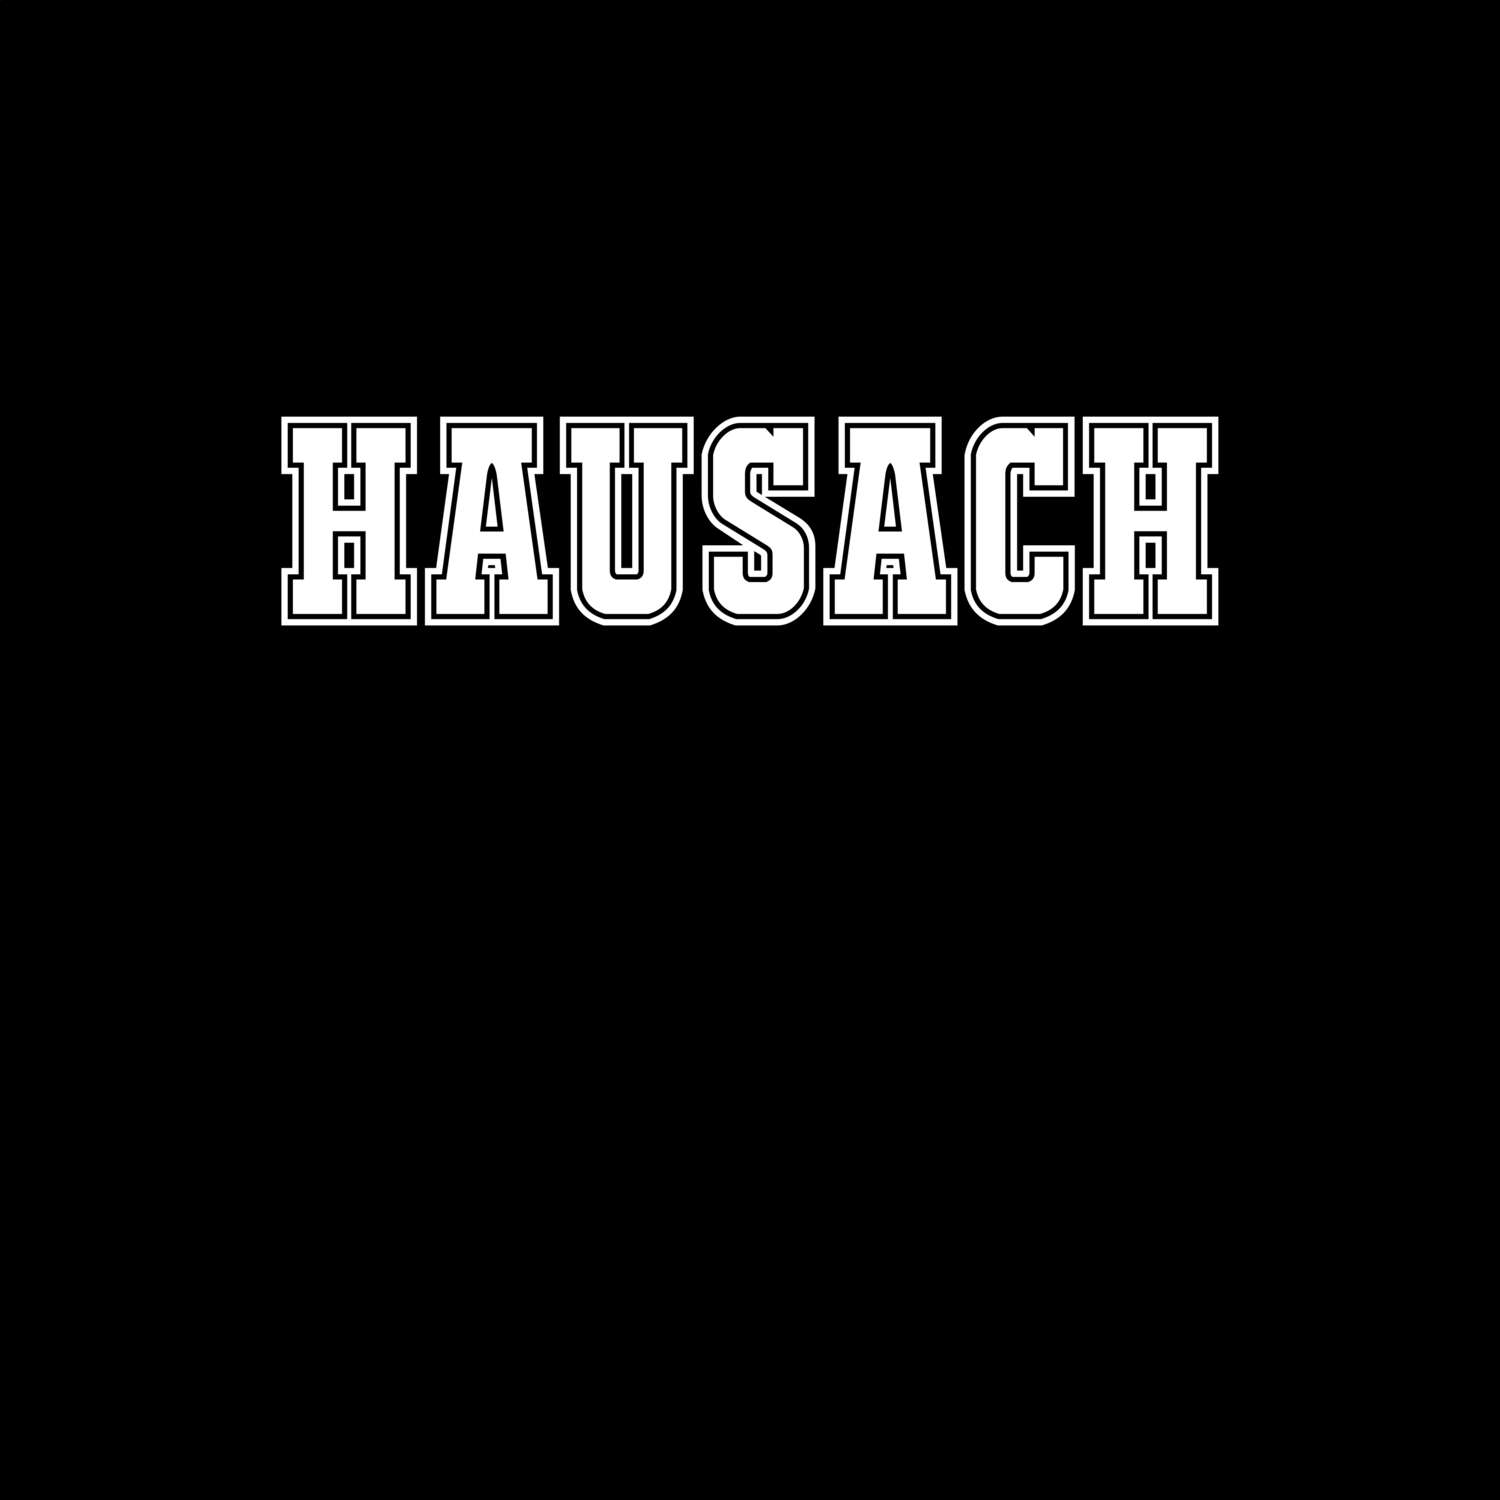 Hausach T-Shirt »Classic«